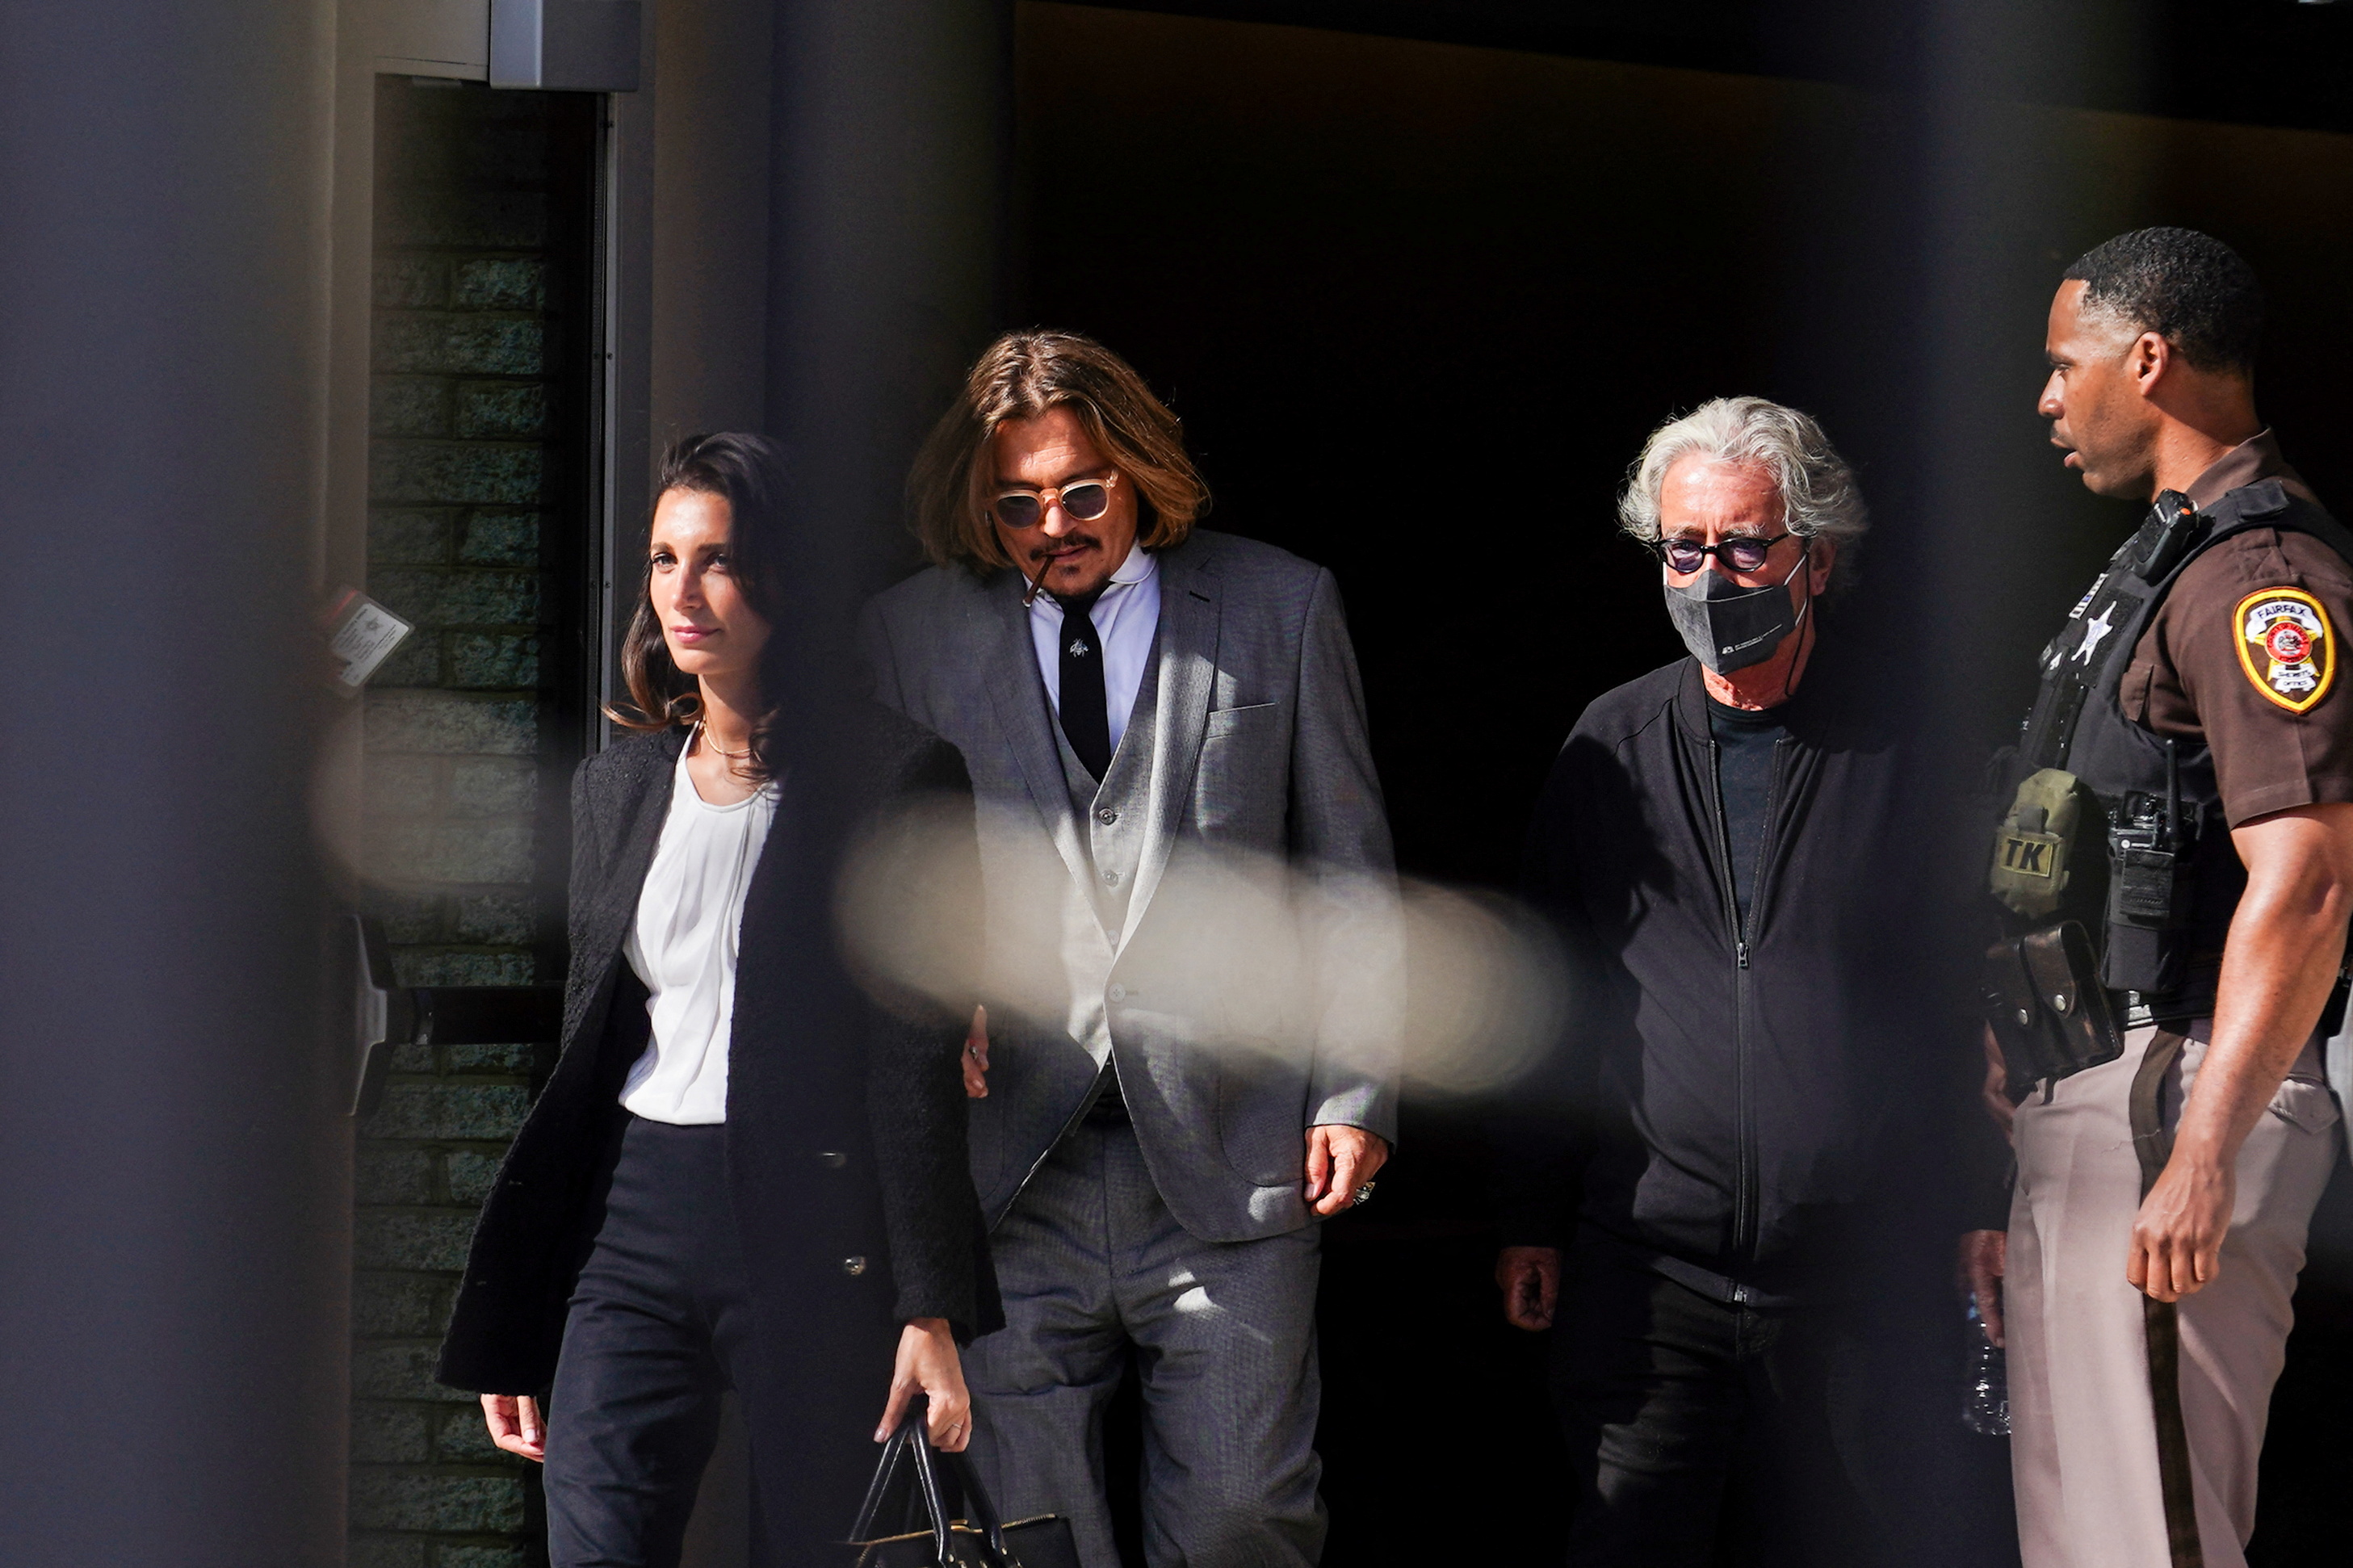 Actors Johnny Depp and Amber Heard face off again in U.S. libel trial |  Reuters